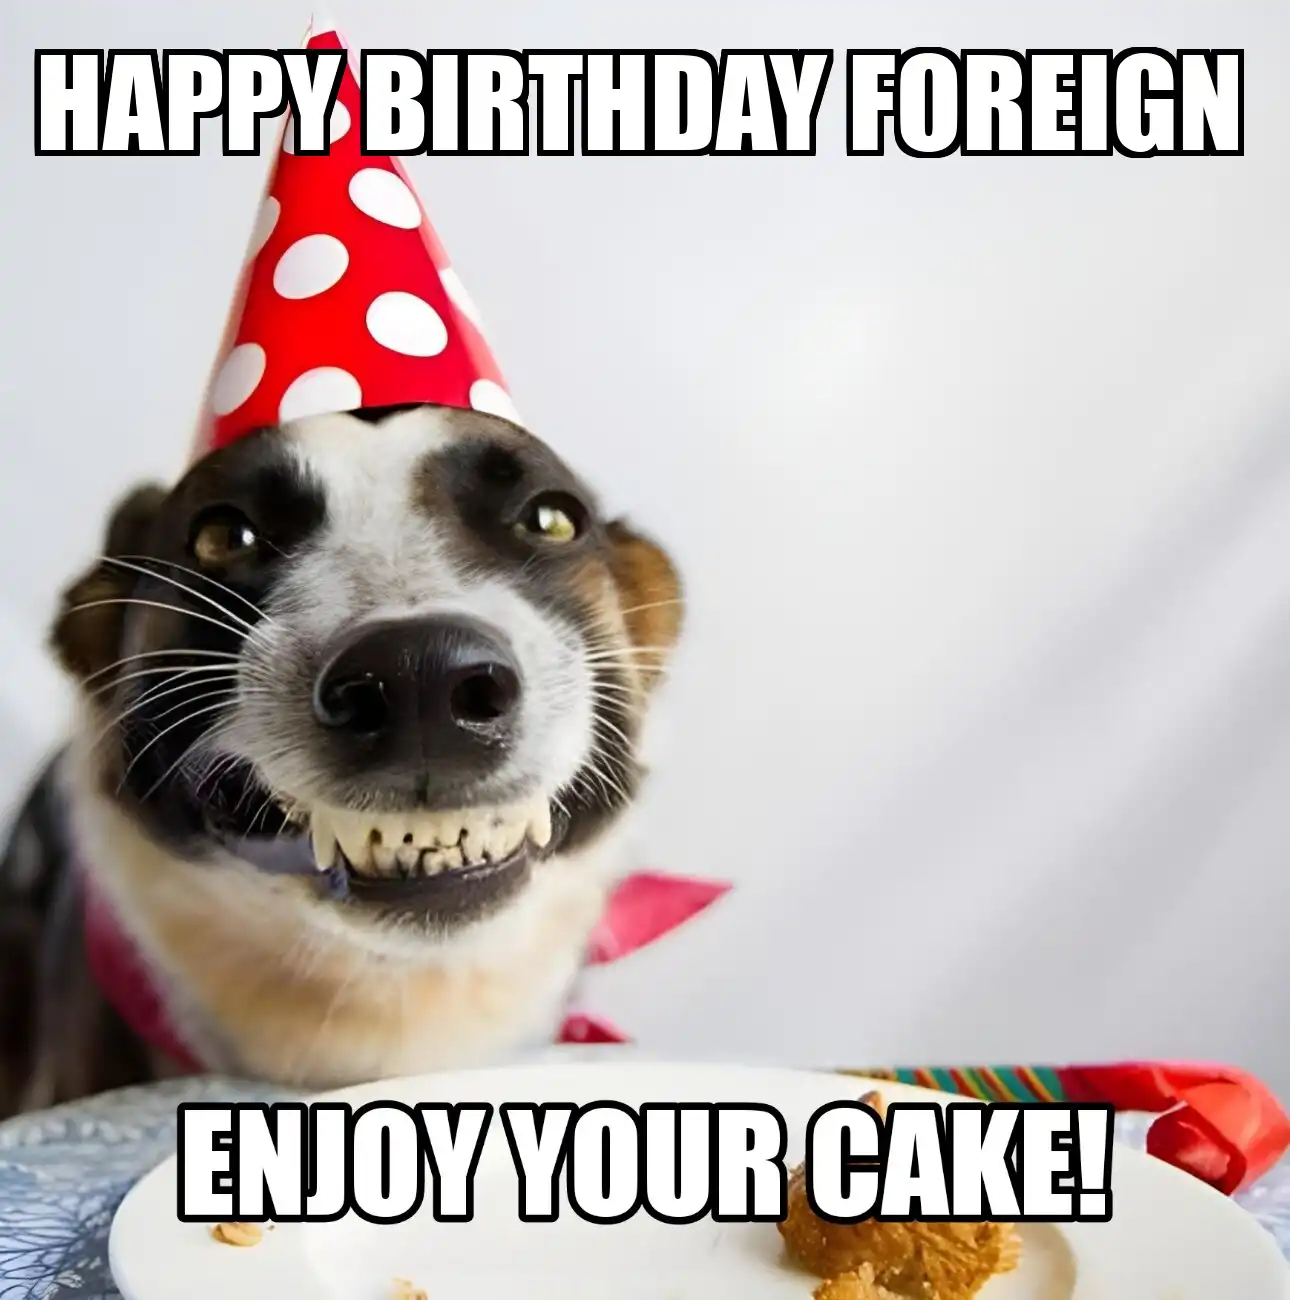 Happy Birthday Foreign Enjoy Your Cake Dog Meme